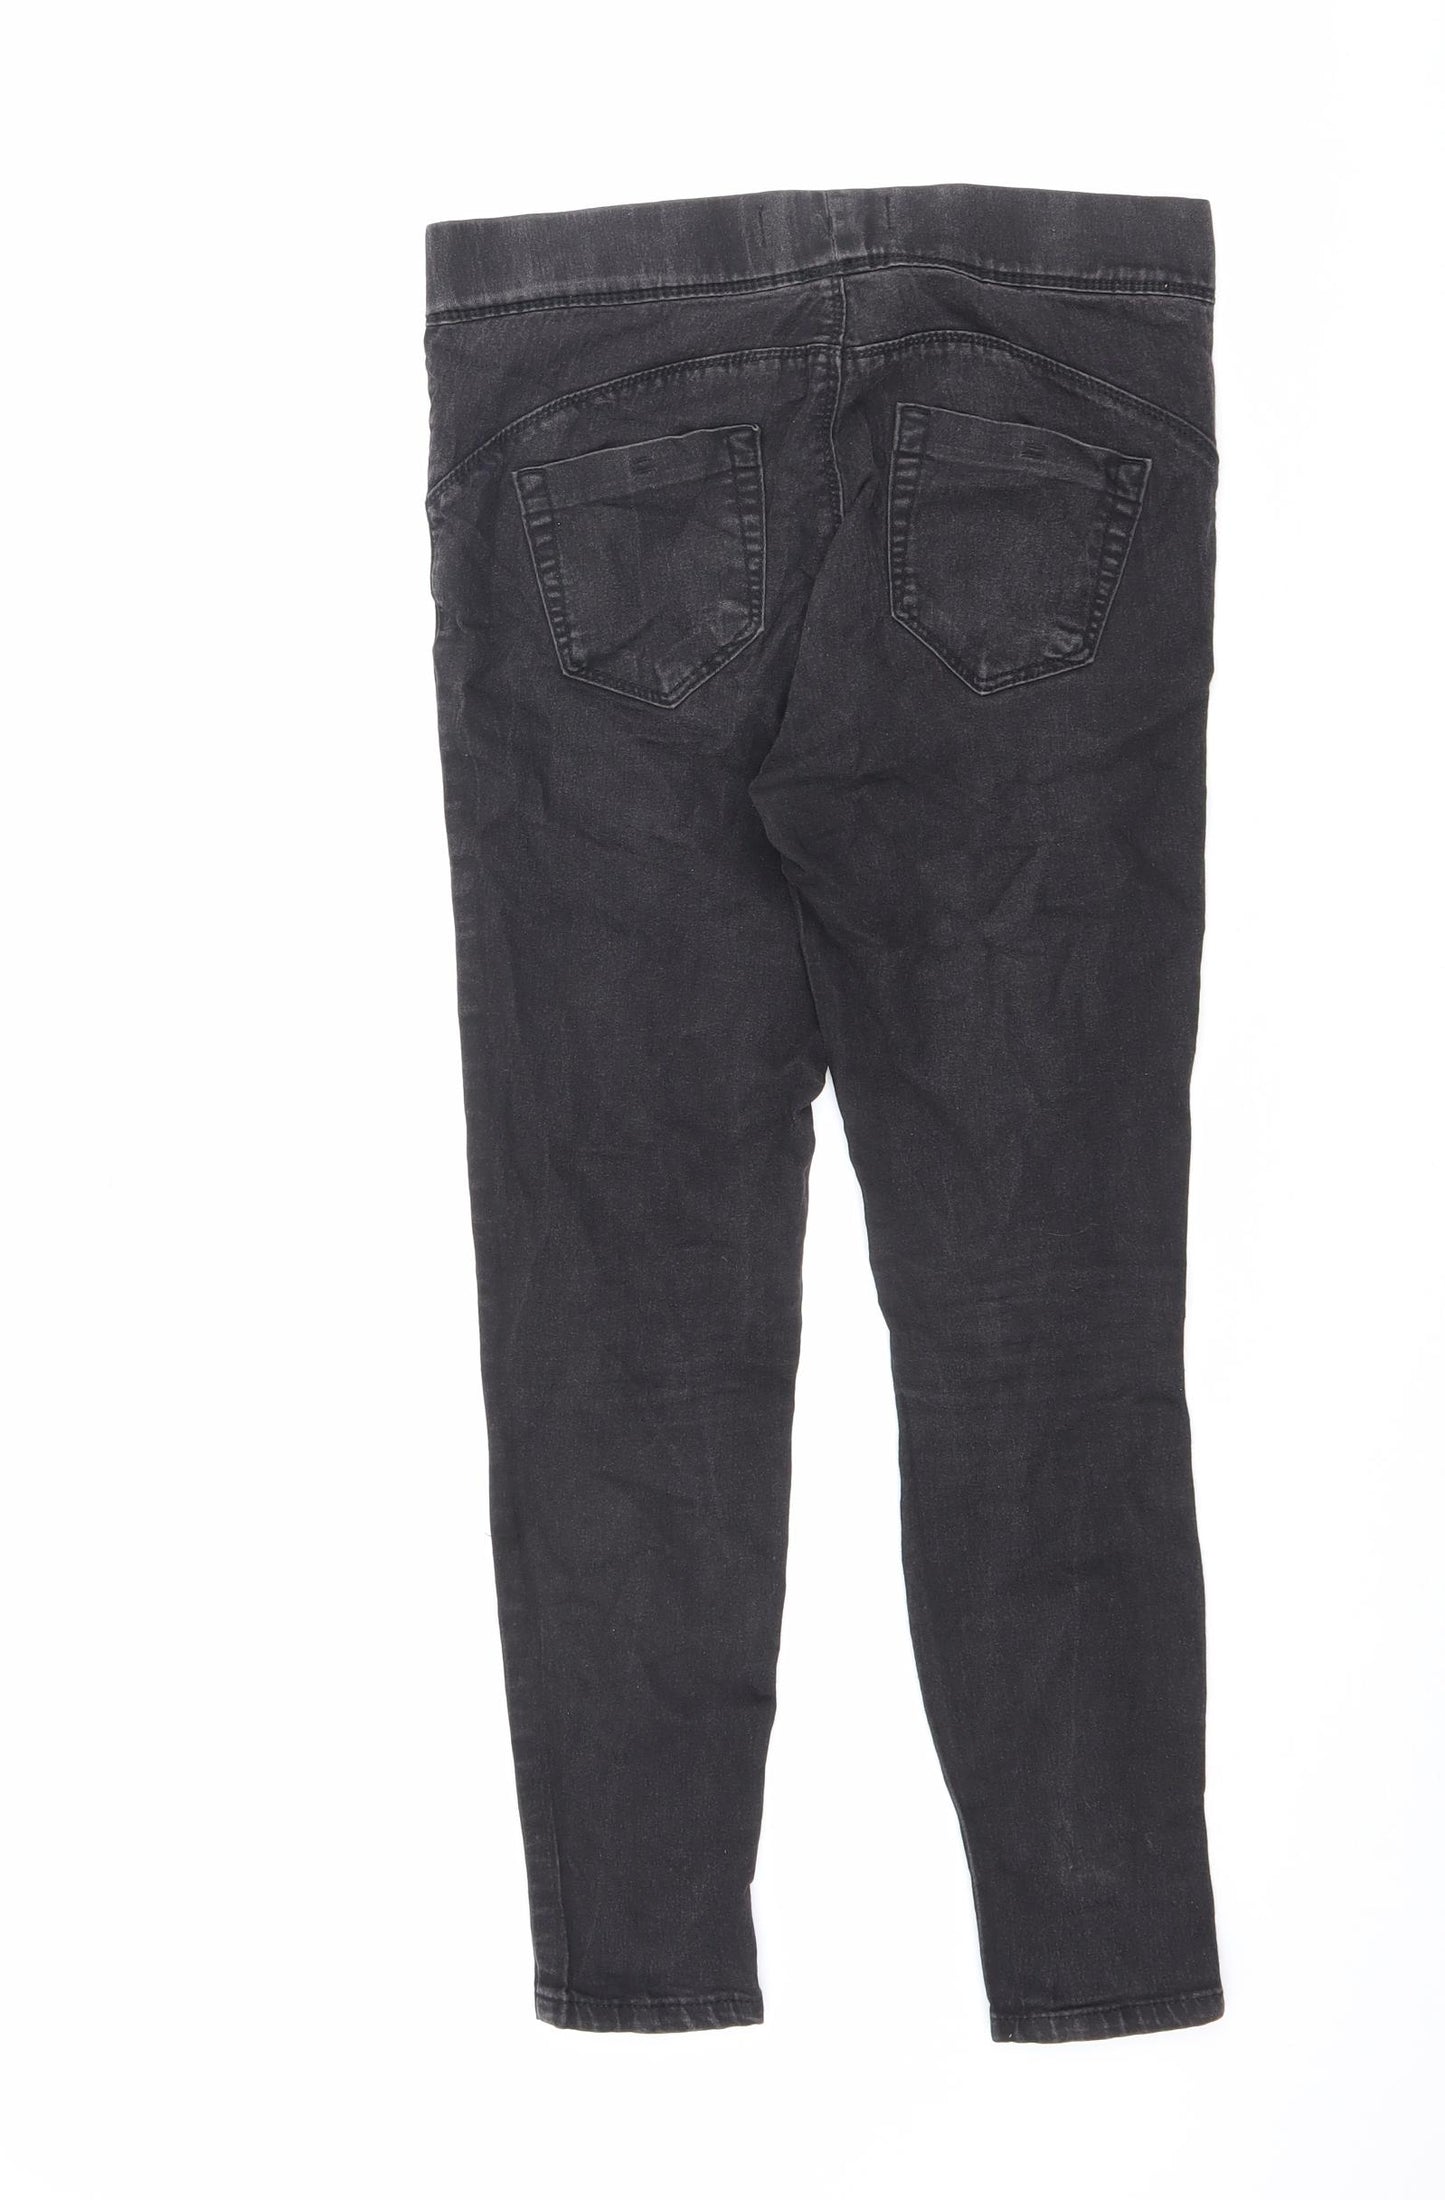 Denim & Co. Womens Black Cotton Jegging Jeans Size 10 L25 in Regular - Elastic Waist